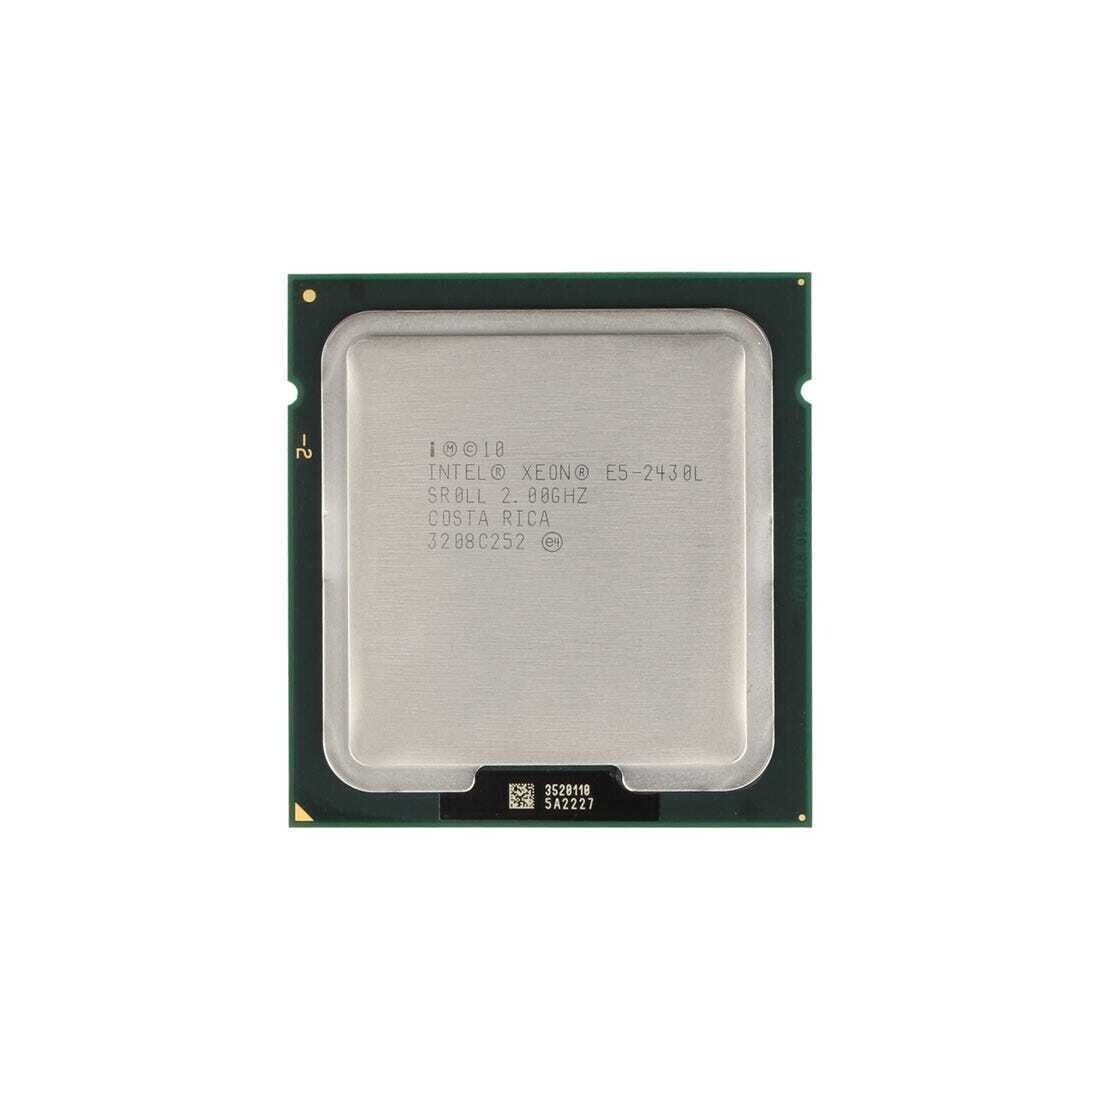 INTEL XEON E5-2430L SR0LL 2.0GHZ LGA1356 CPU PROCESSOR